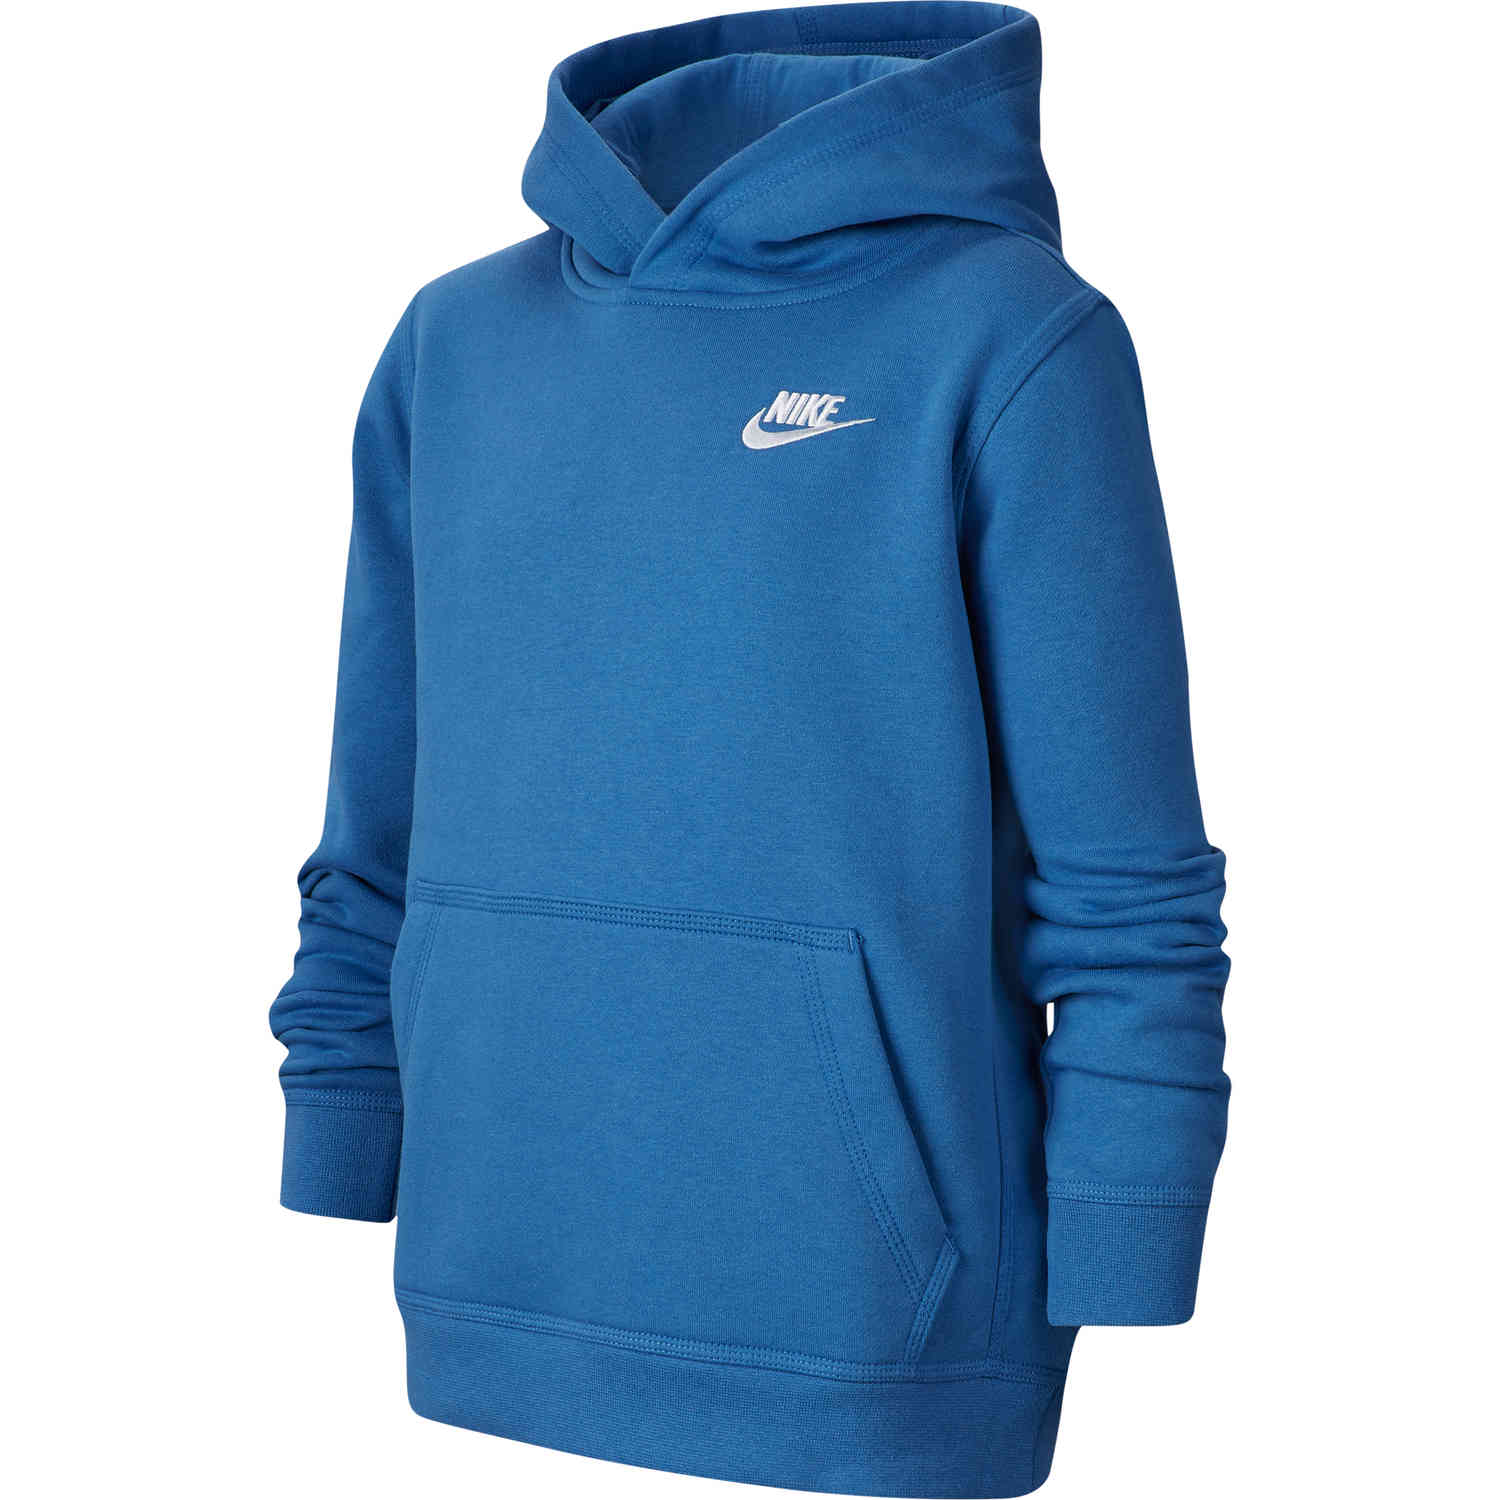 blue nike pullover Shop Nike Clothing 